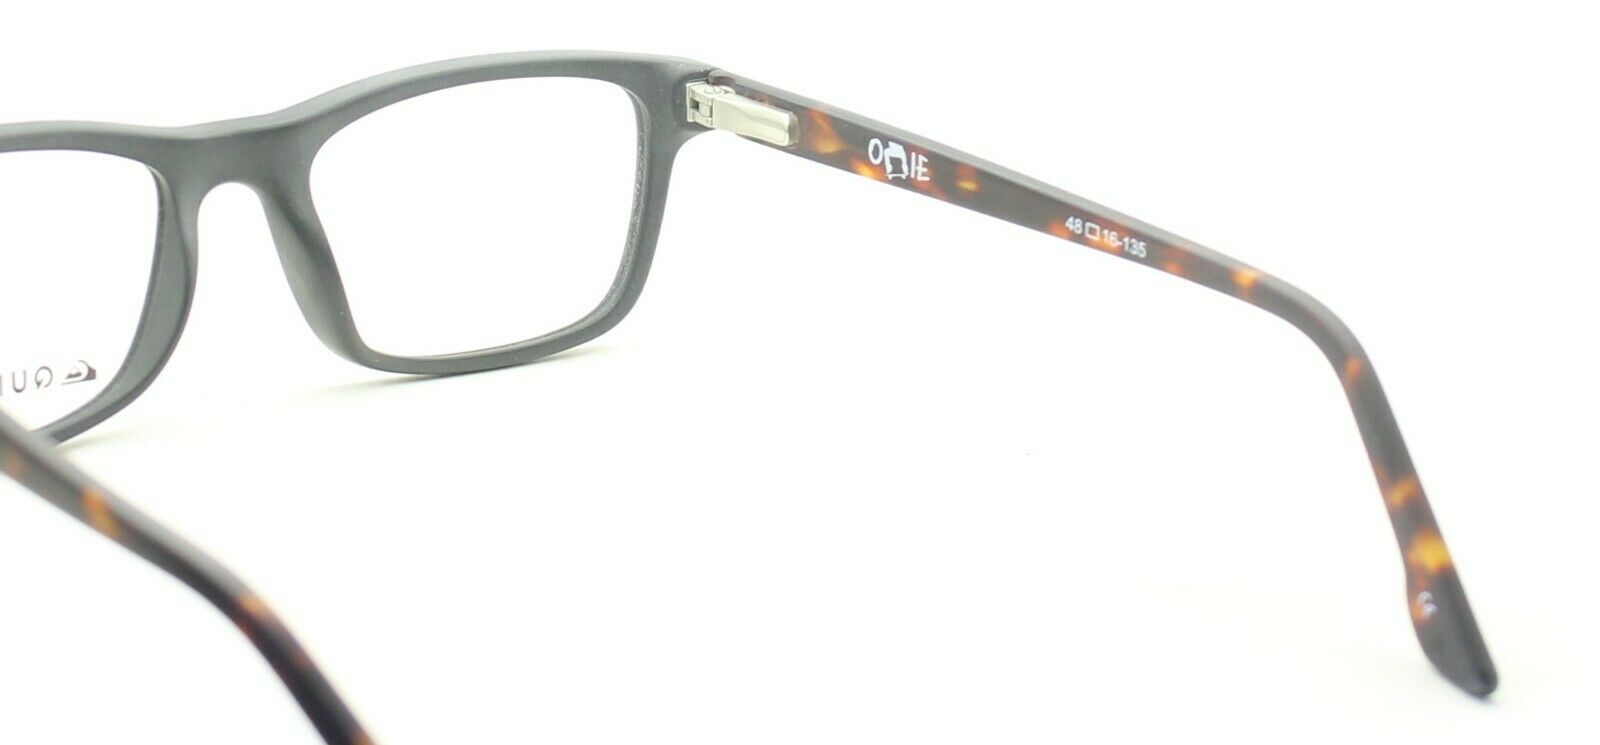 QUIKSILVER QS Ollie EQBEG03015 48mm RX Optical FRAMES Glasses Eyewear Eyeglasses